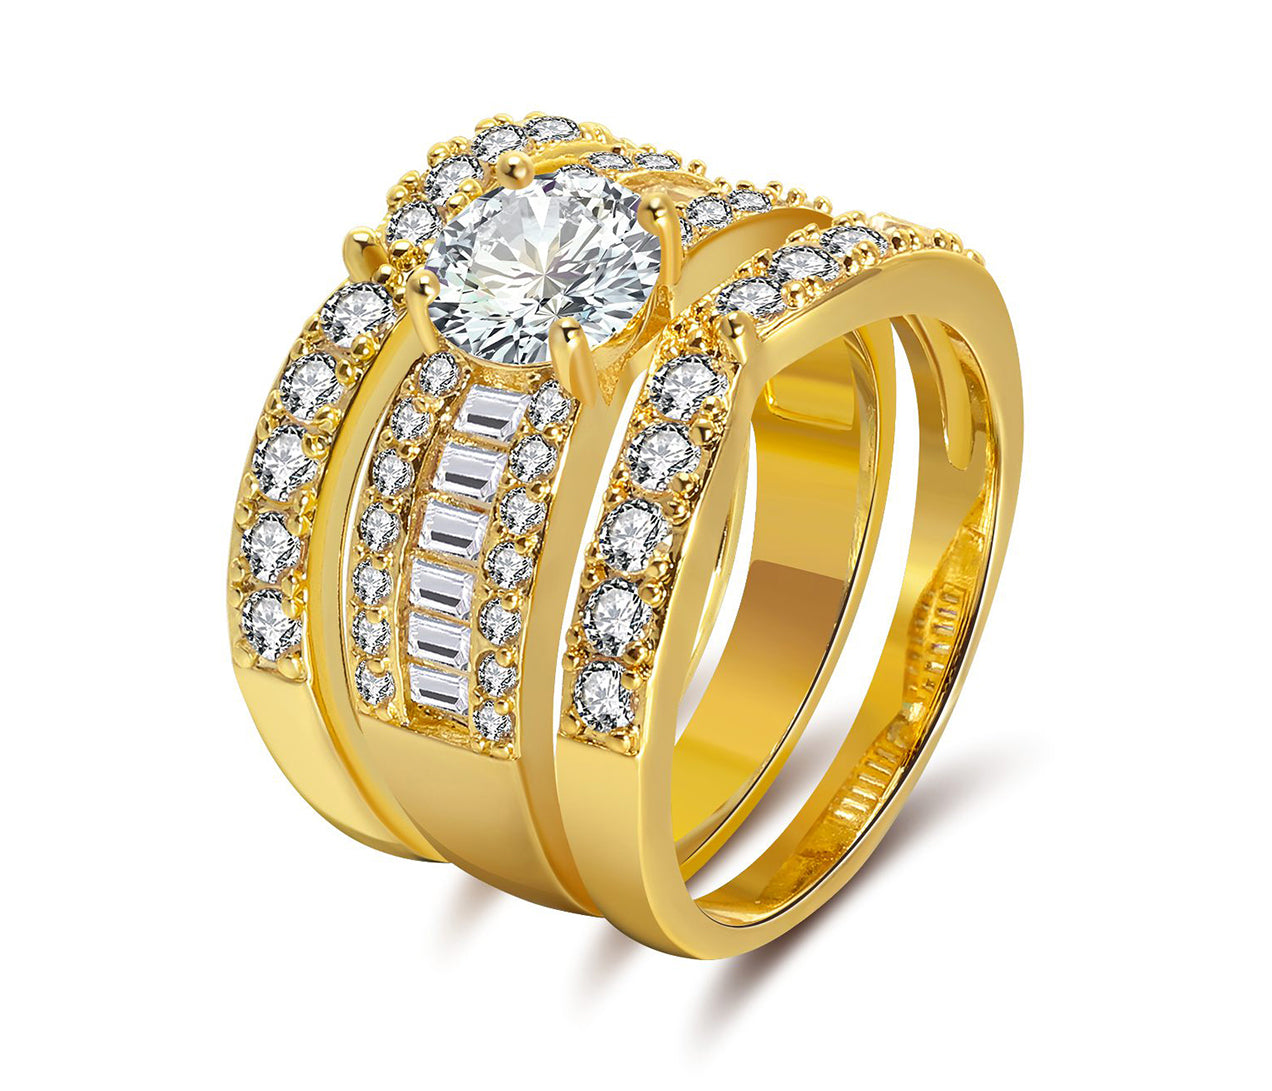 Enchanment Bridal Set 3pcs Cz Engagement Ring Band Womens Ginger Lyne Collection - gold,10